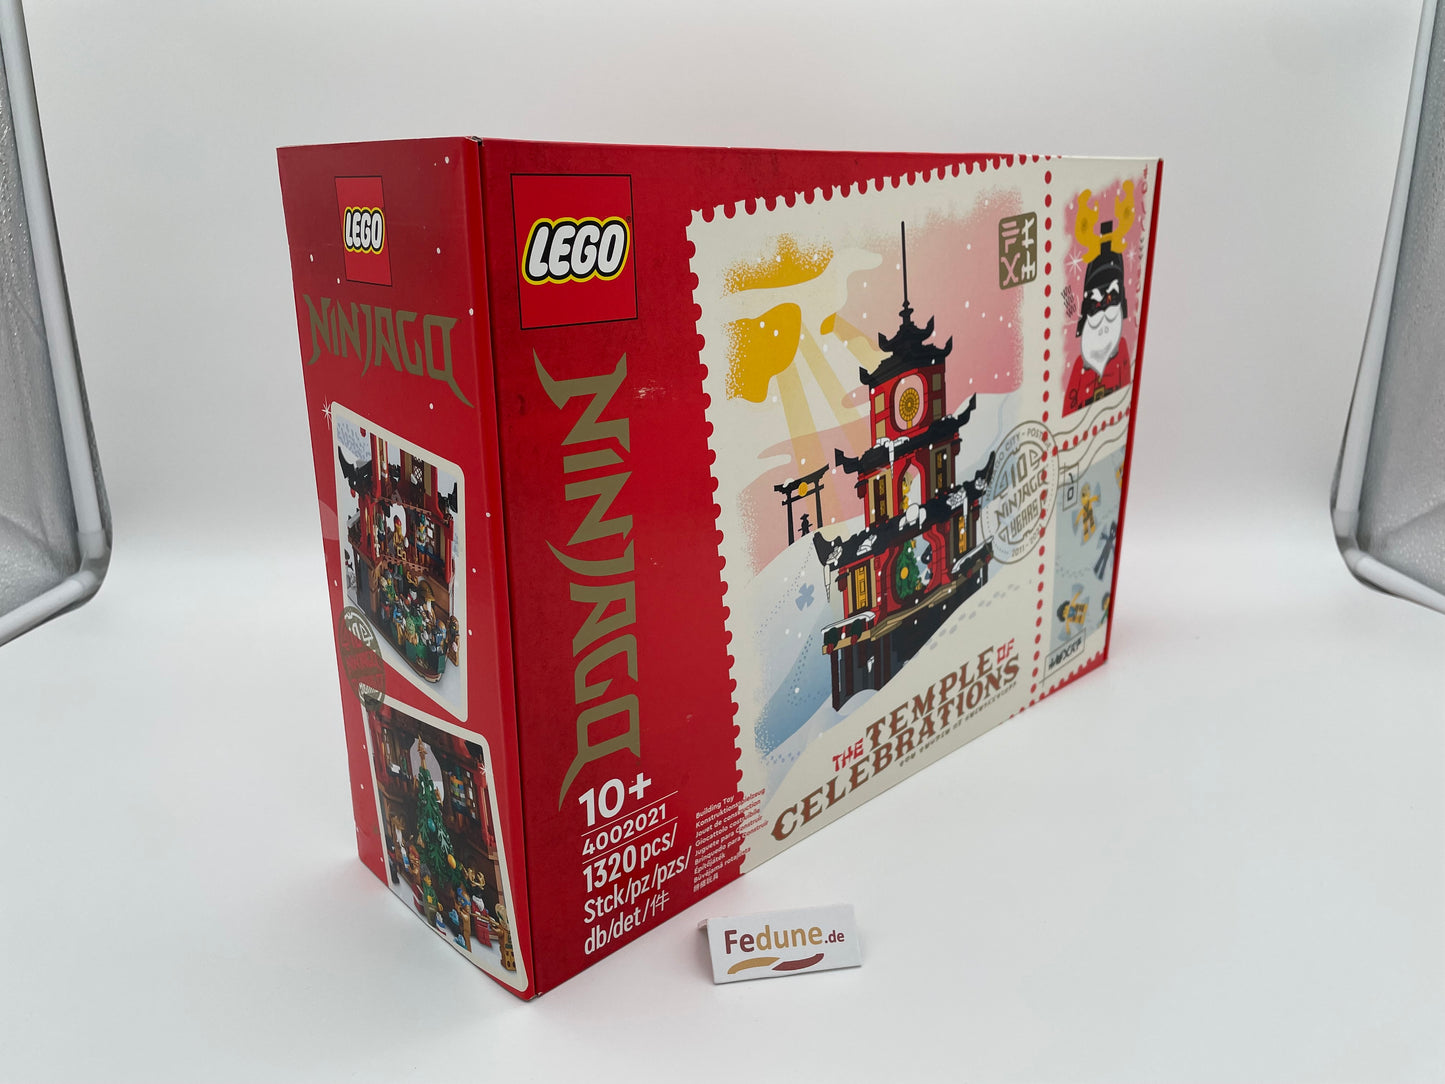 LEGO® 4002021 Mitarbeitergeschenk 2021 Ninjago - The Temple of Celebrations